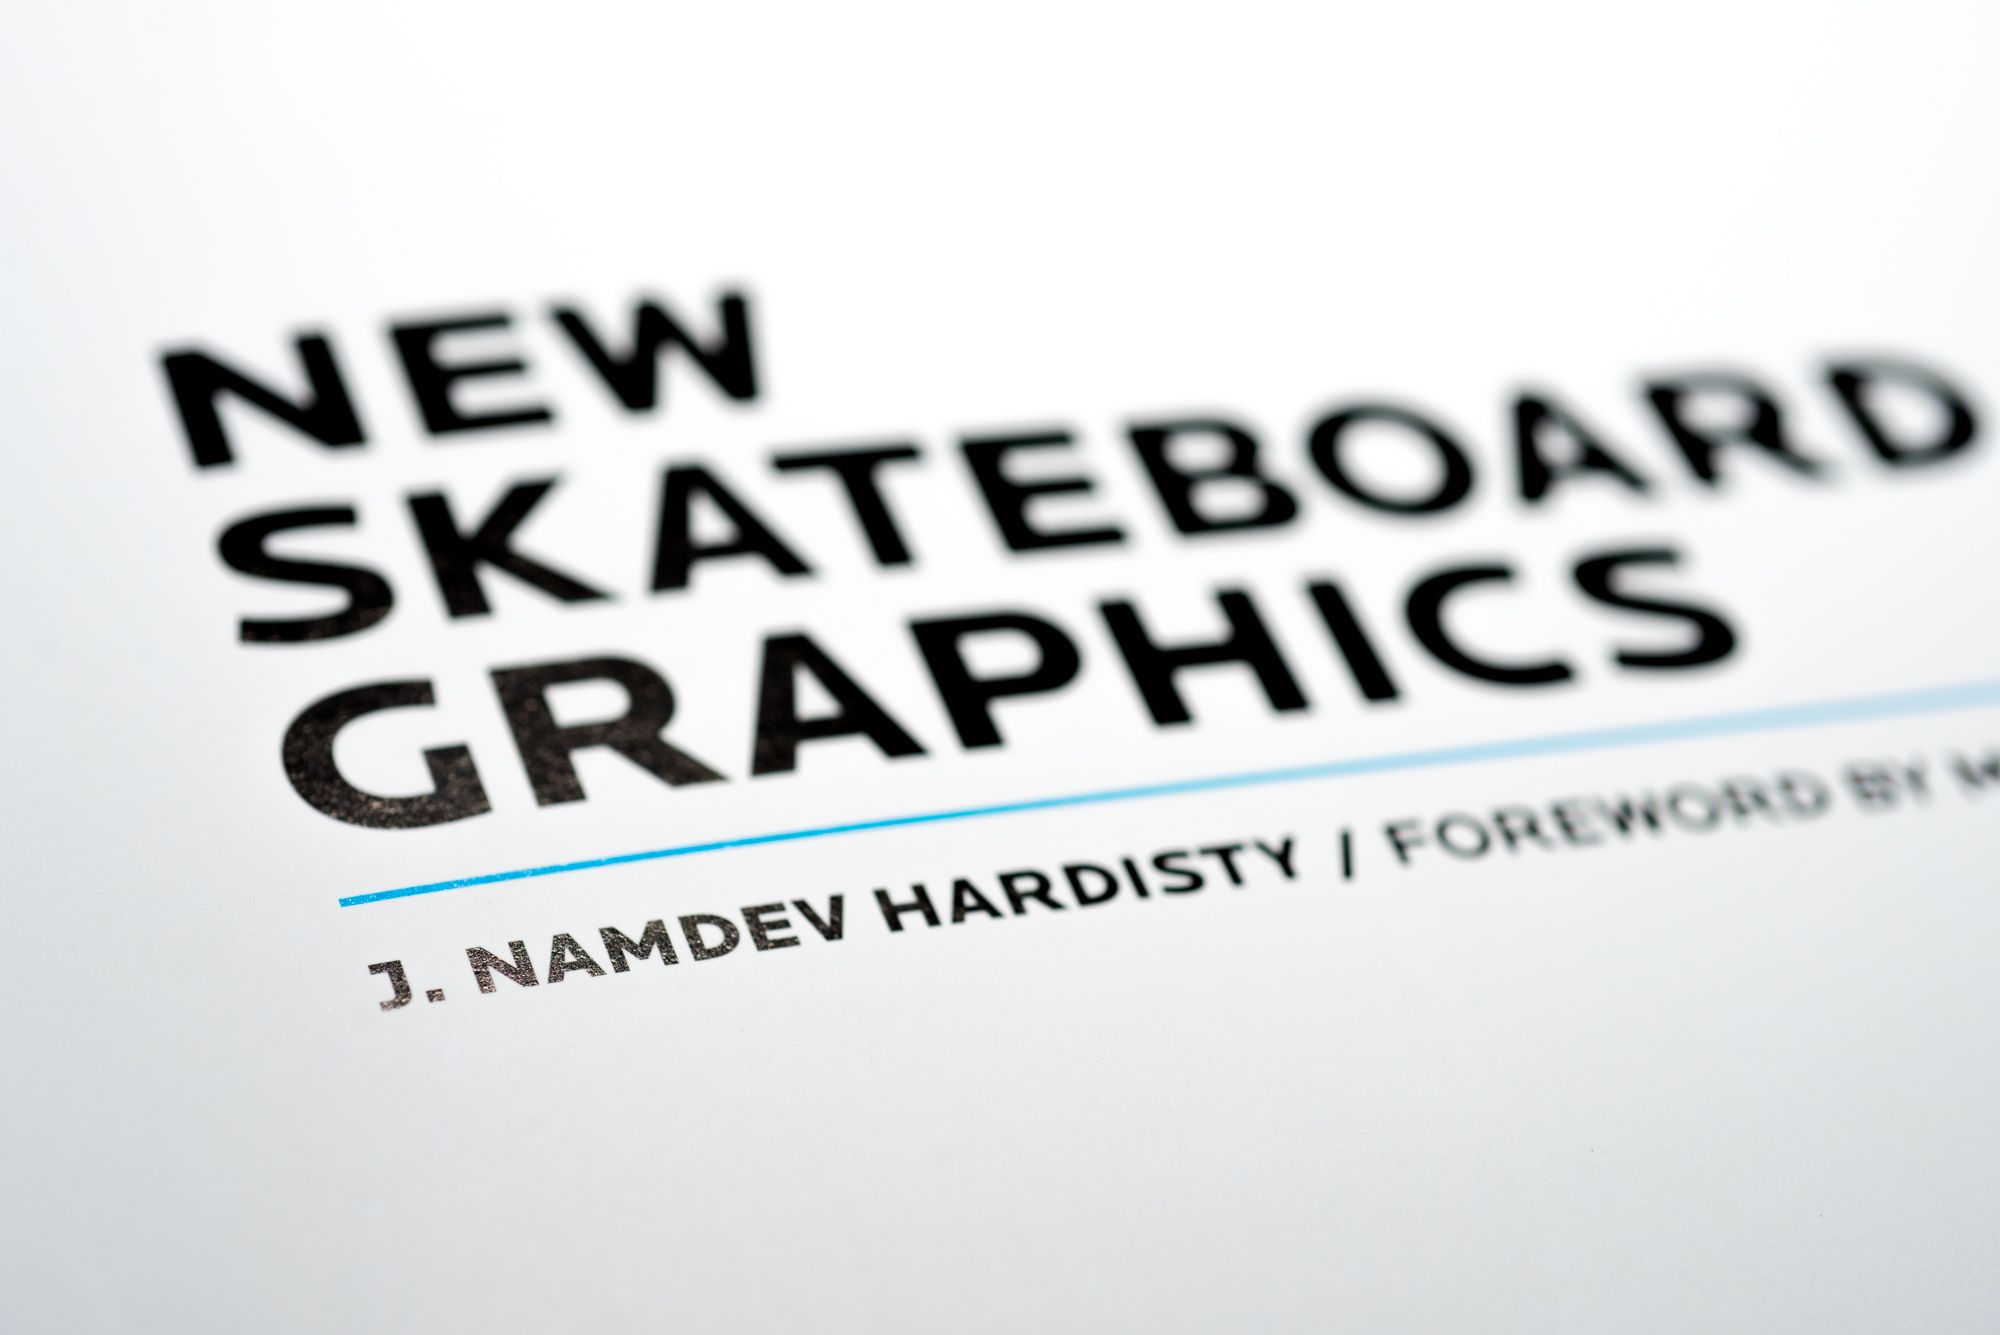 New Skateboard Graphics book